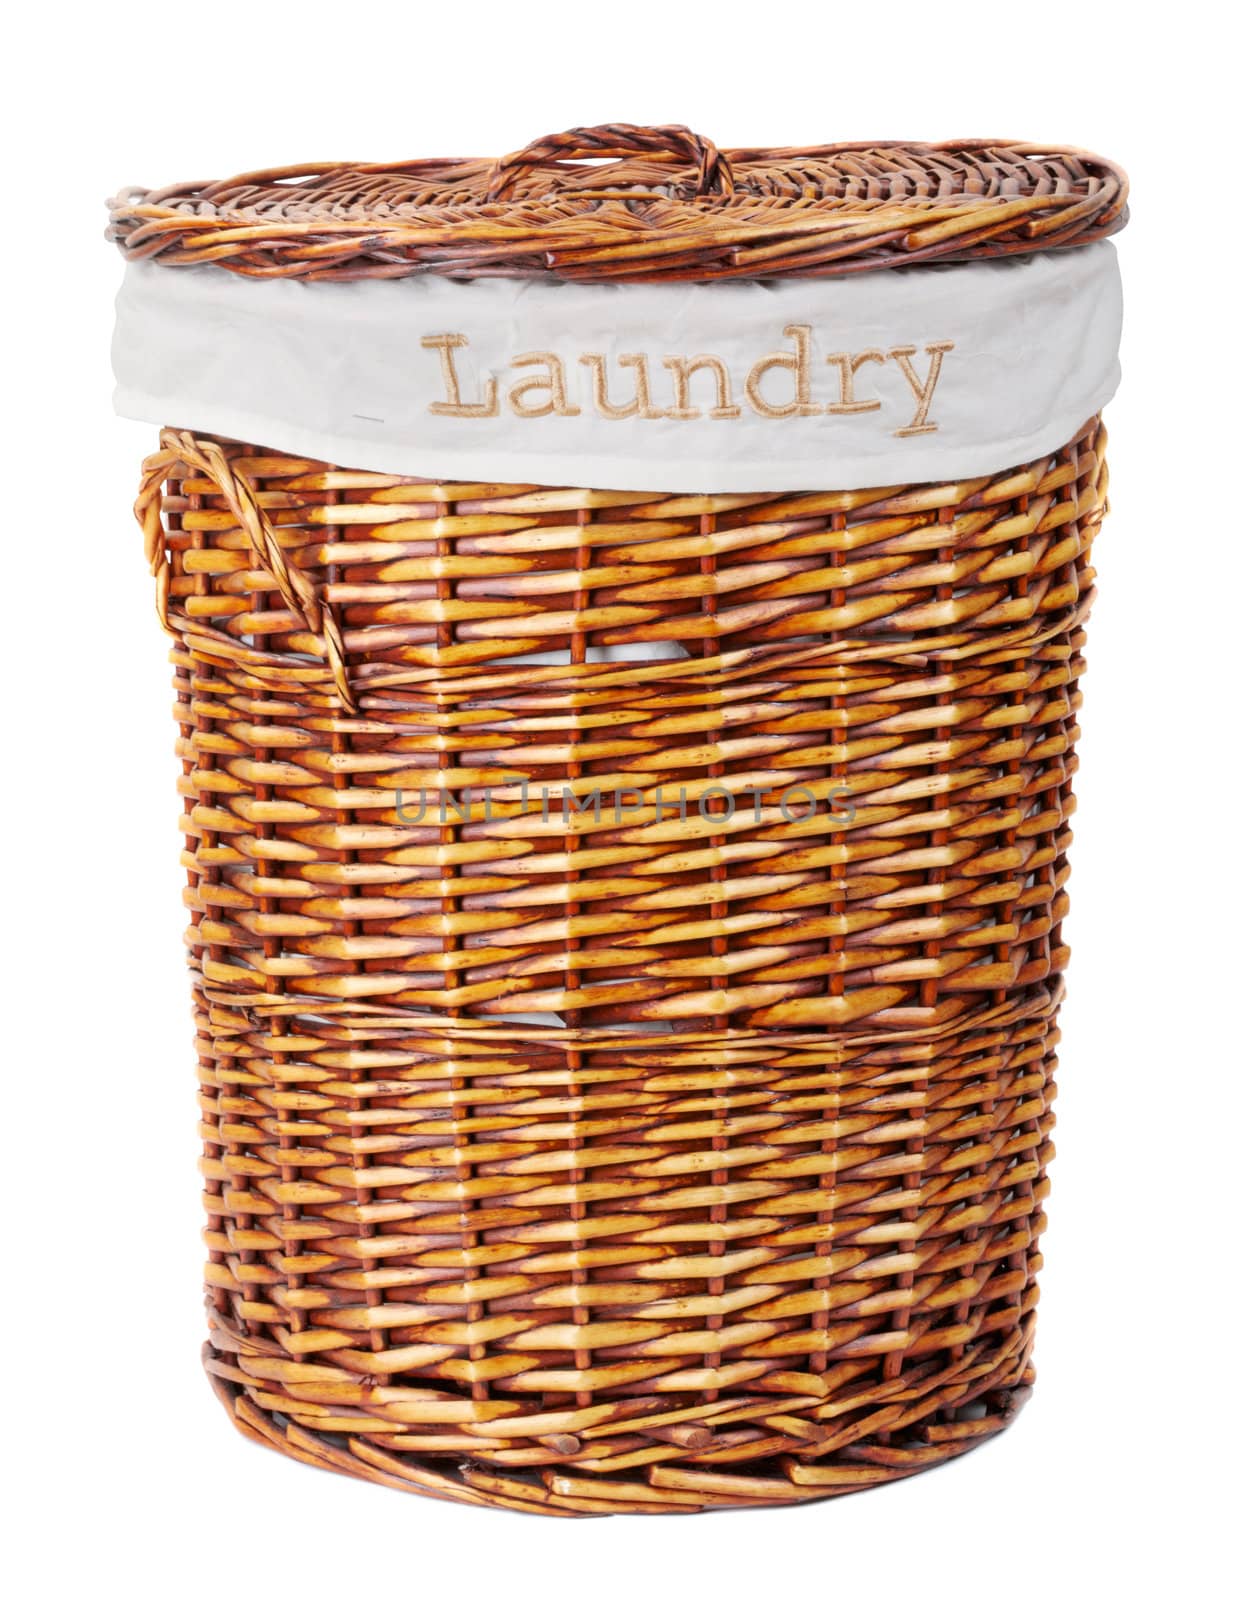 Laundry Basket by petr_malyshev